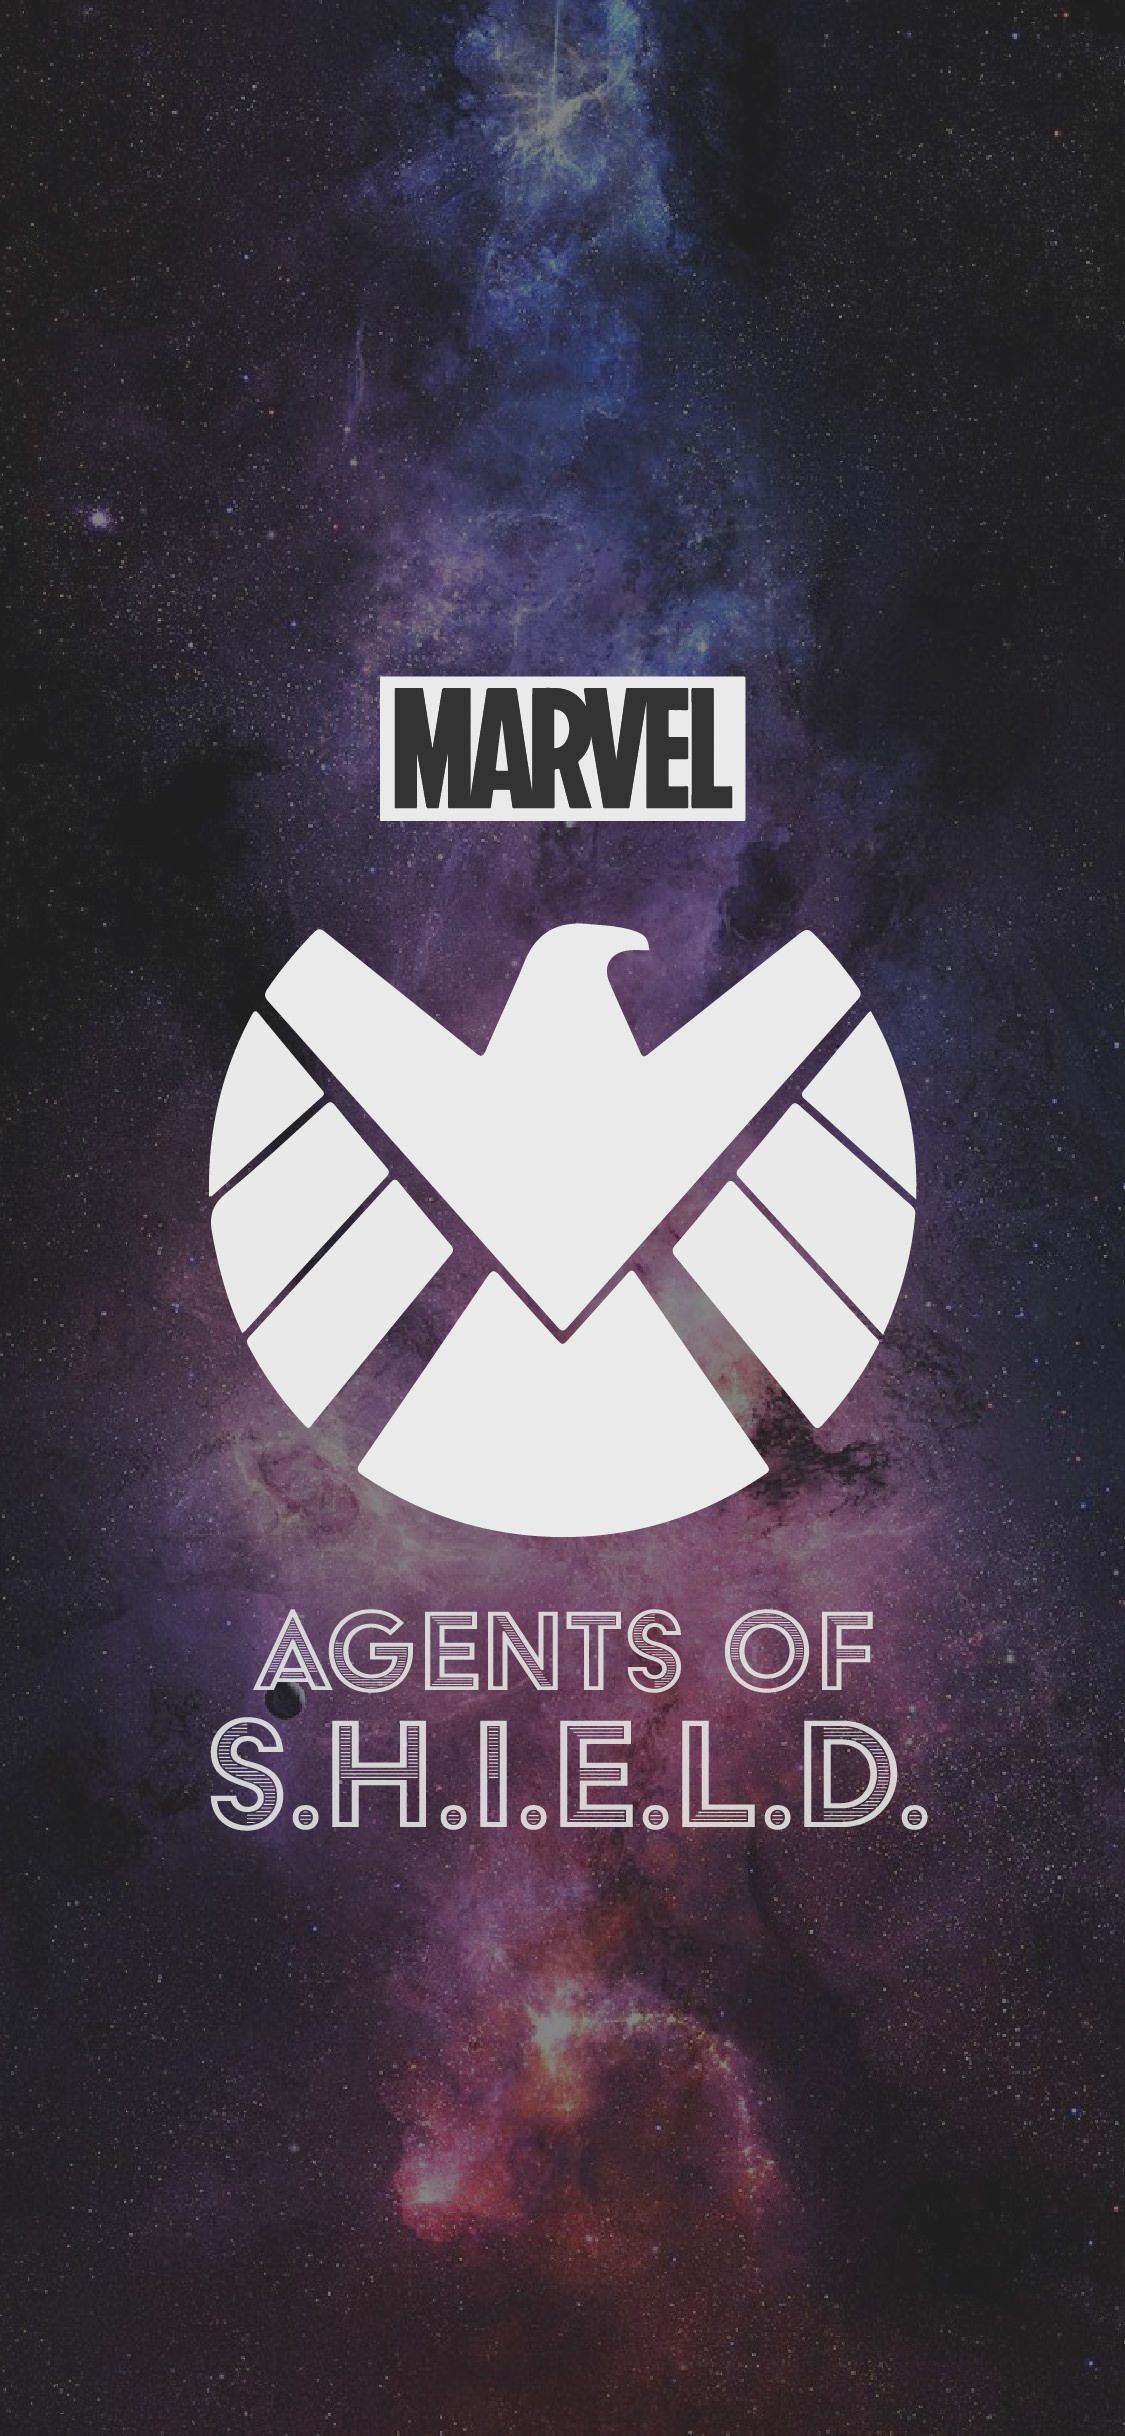 S.H.I.E.L.D.: The worldwide law-enforcement organization, Marvel. 1130x2440 HD Wallpaper.